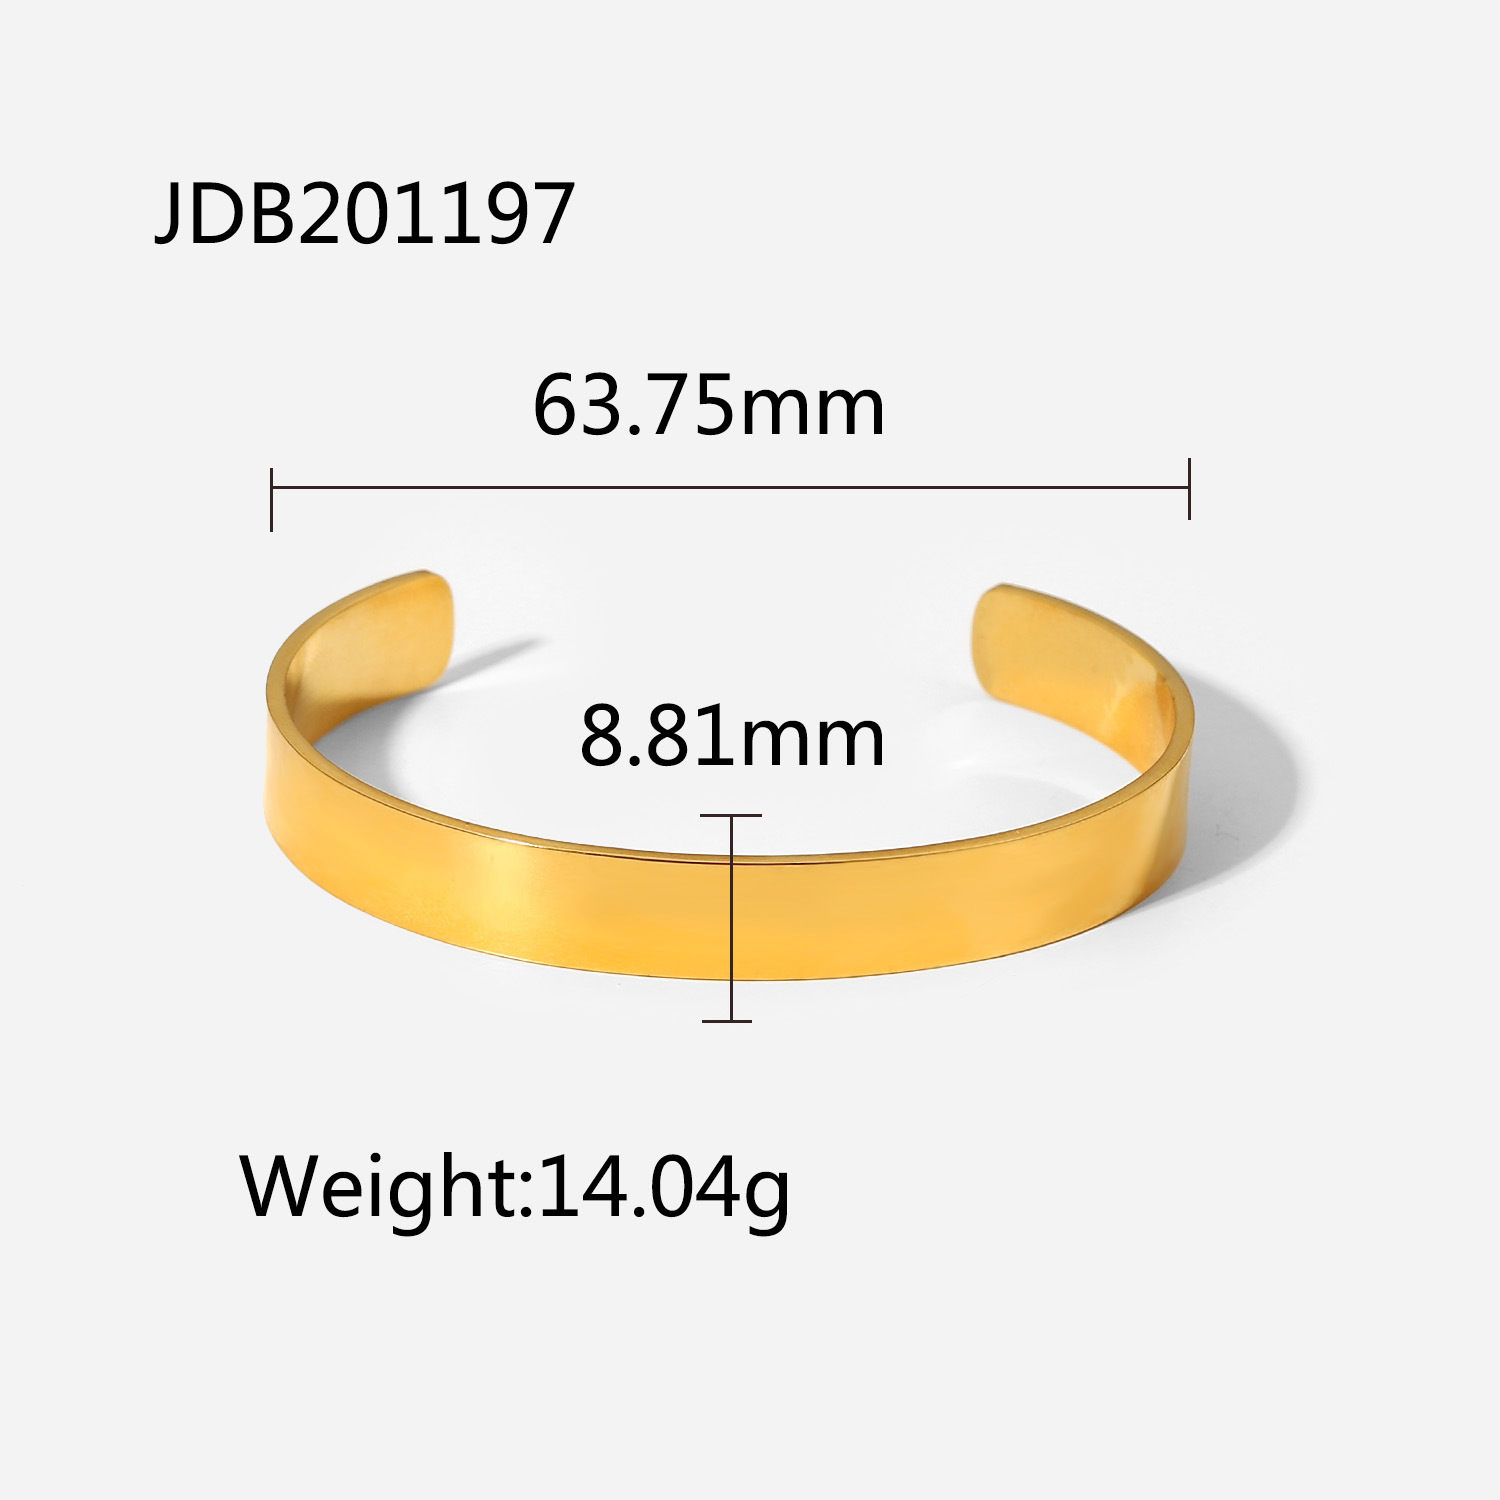 5:JDB201197  63.75x8.81mm